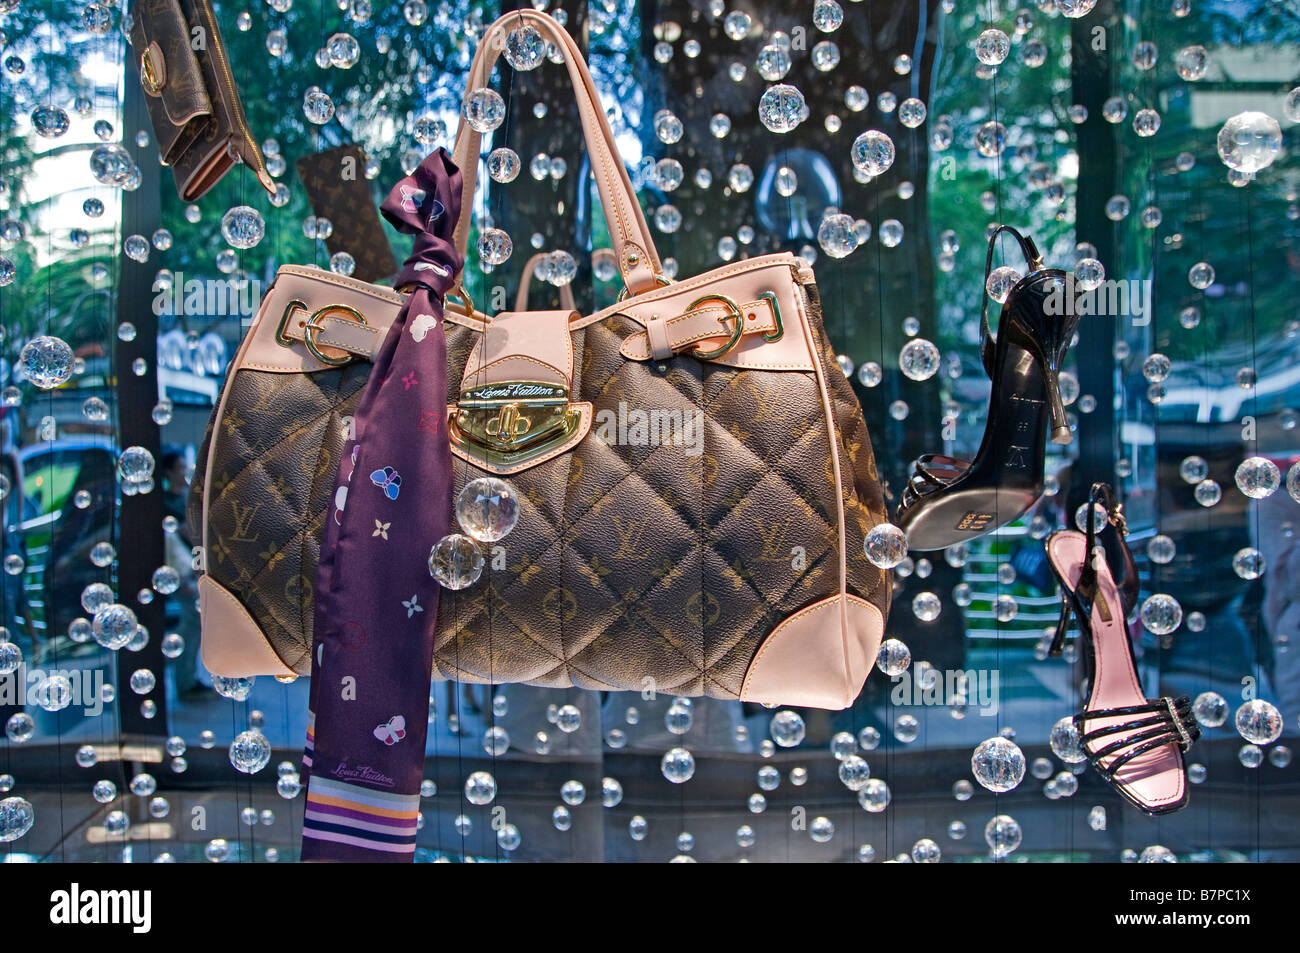 Louis Vuitton bag show window display Singapore Orchard road modern Stock Photo - Alamy